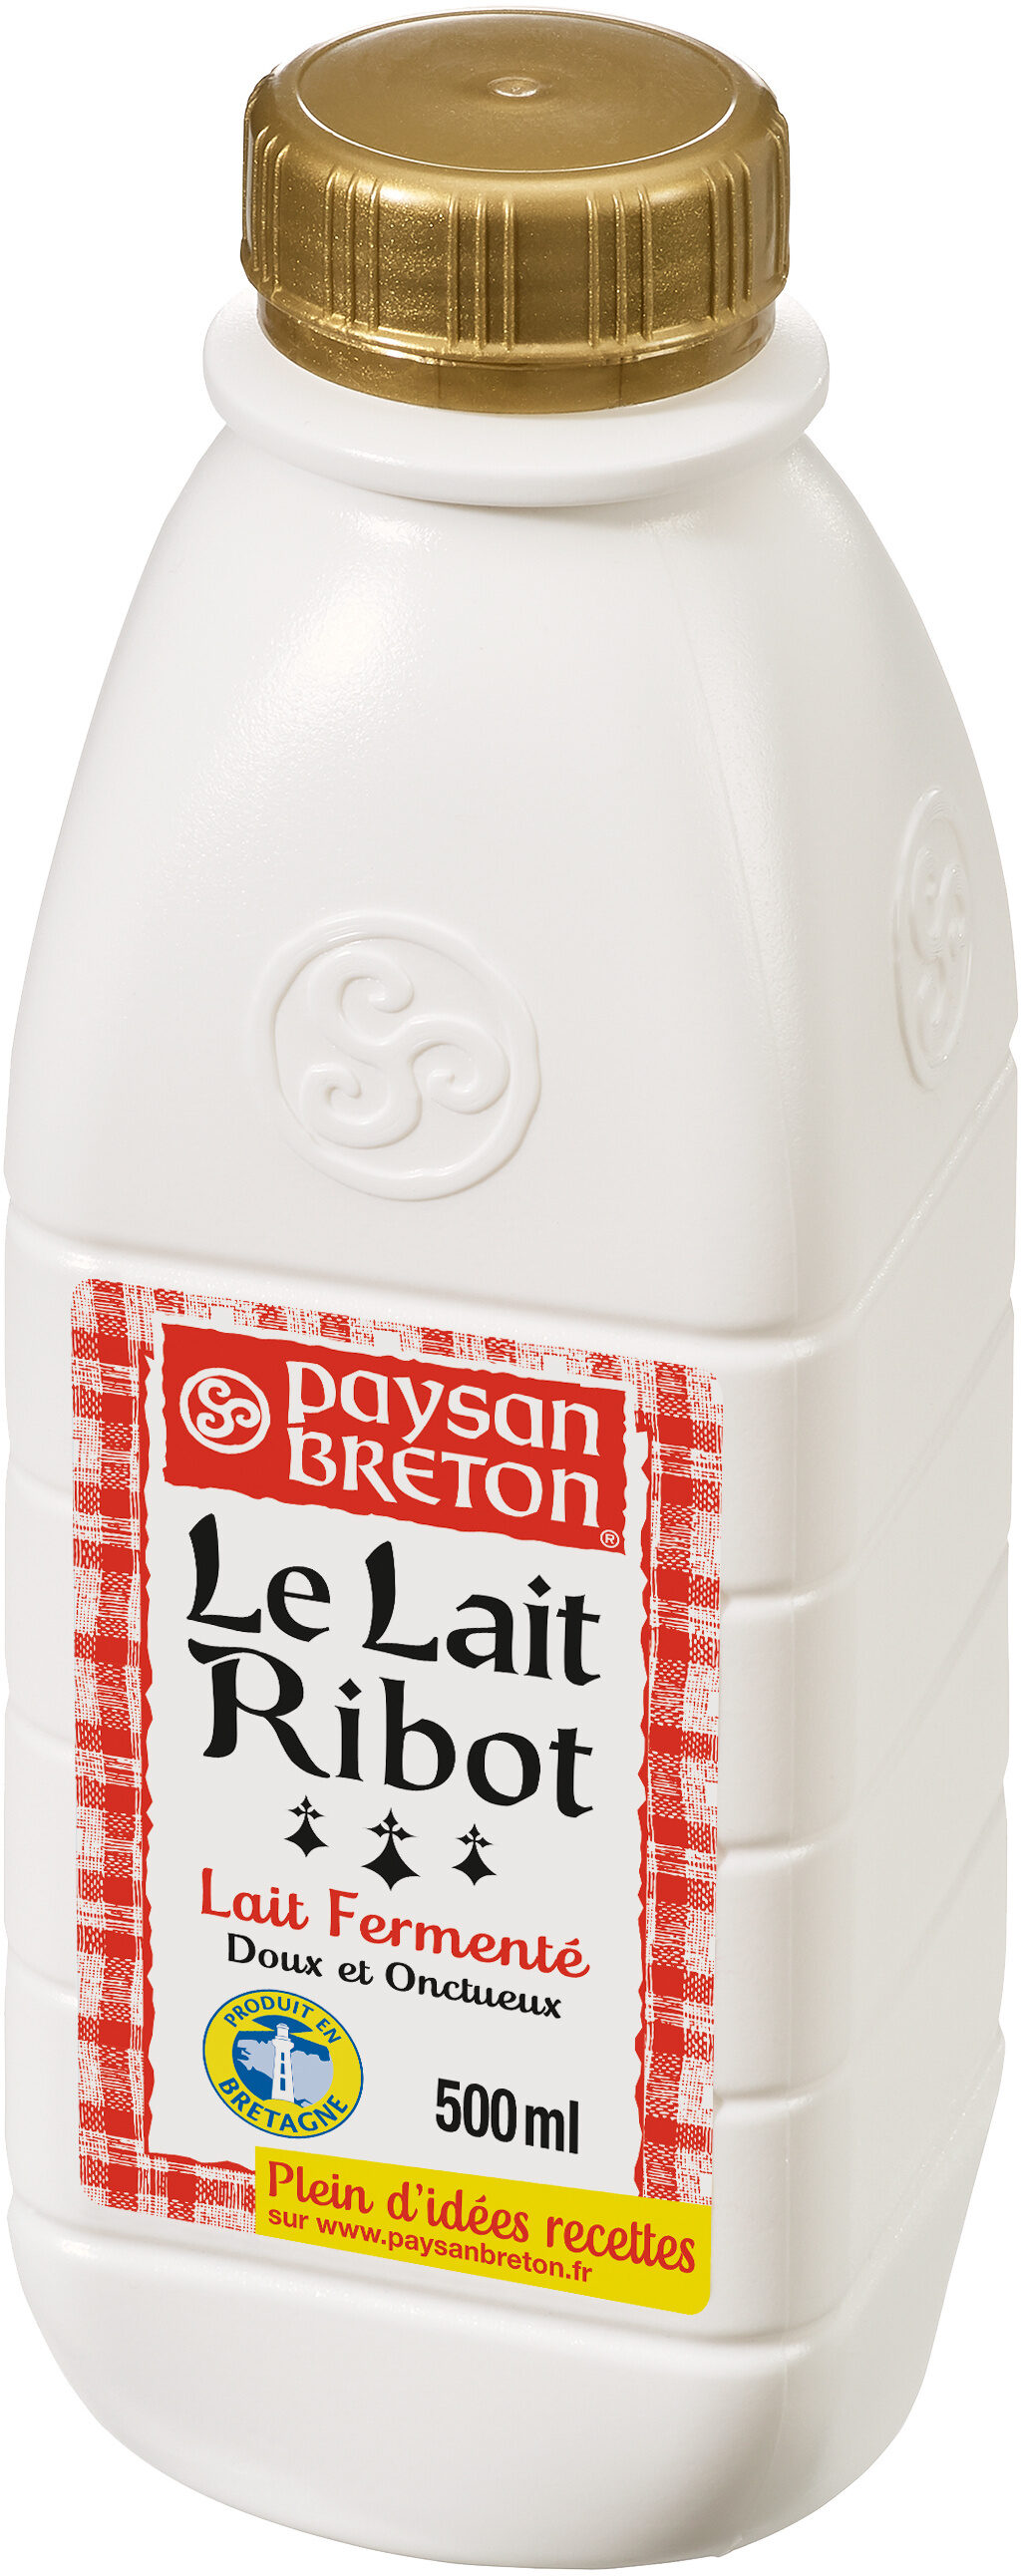 Paysan Breton - Le Lait Ribot - Product - fr